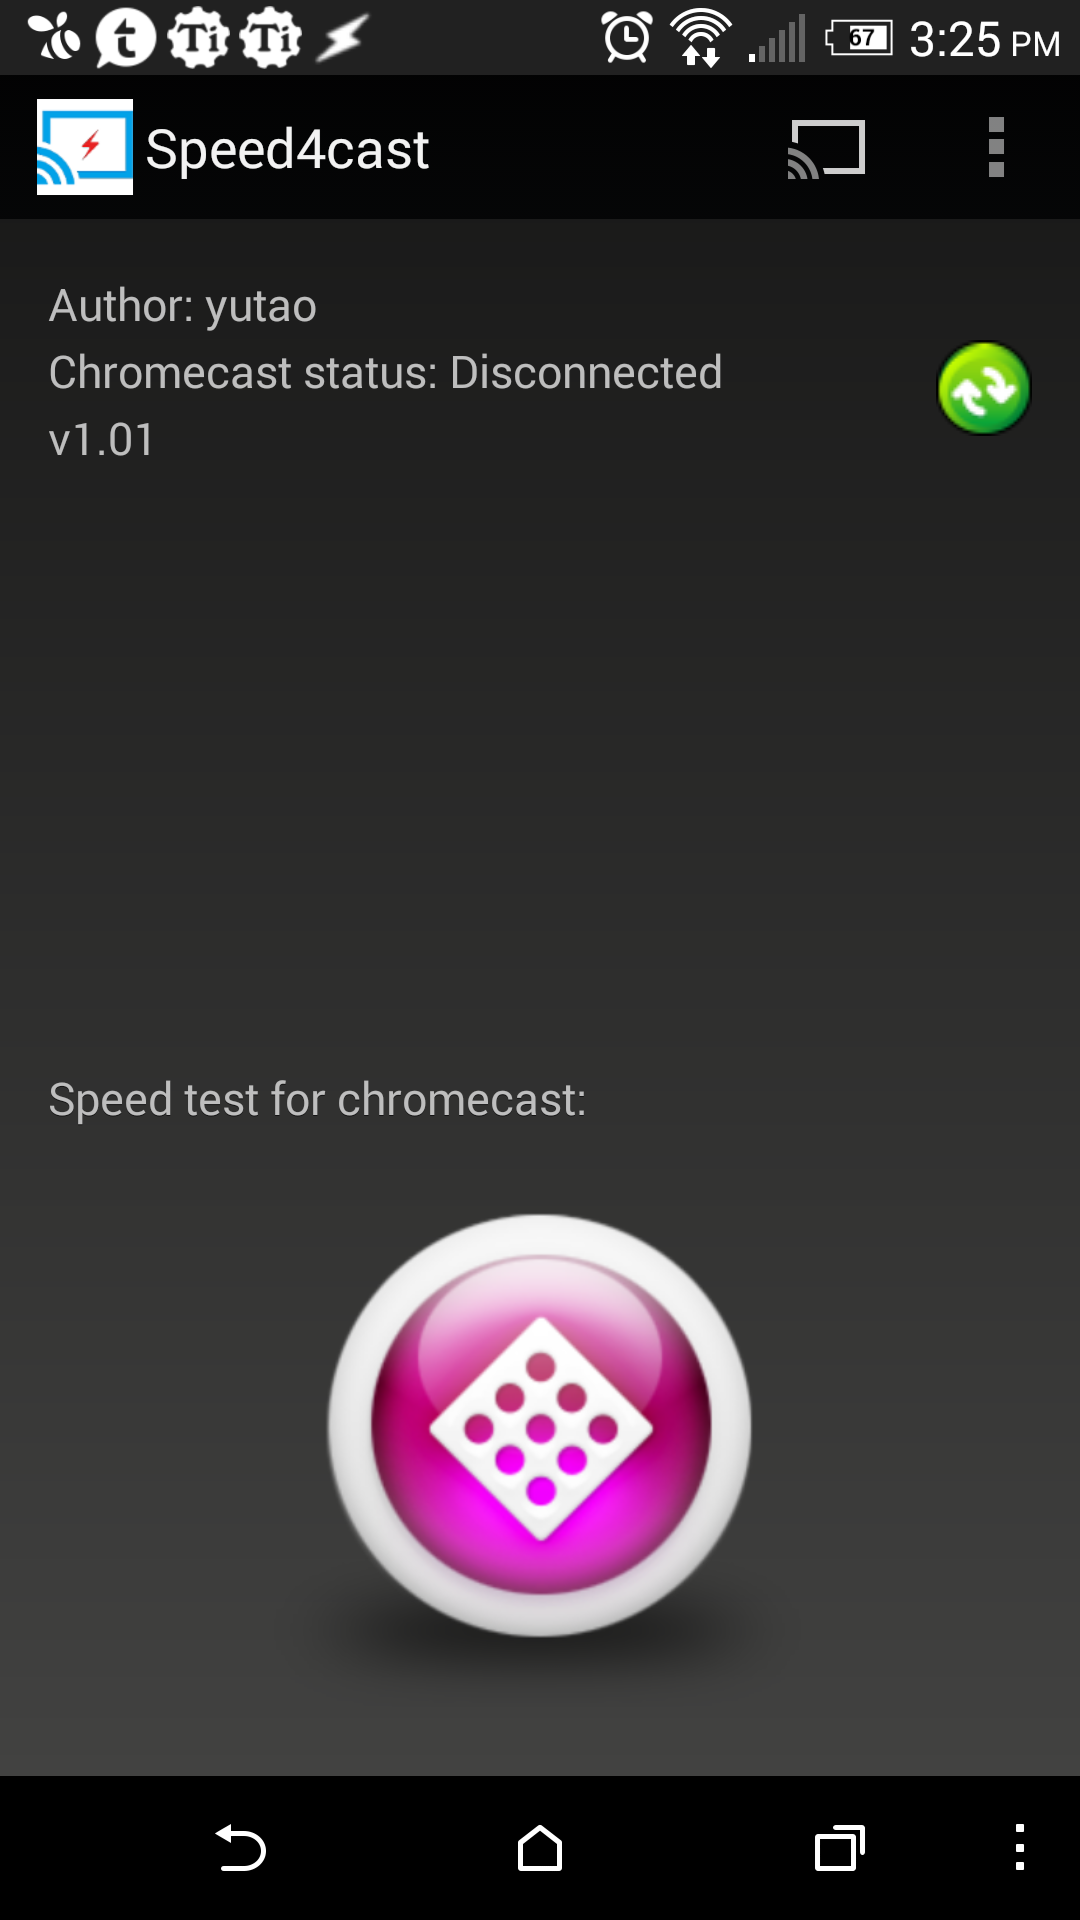 Speed4cast main screen